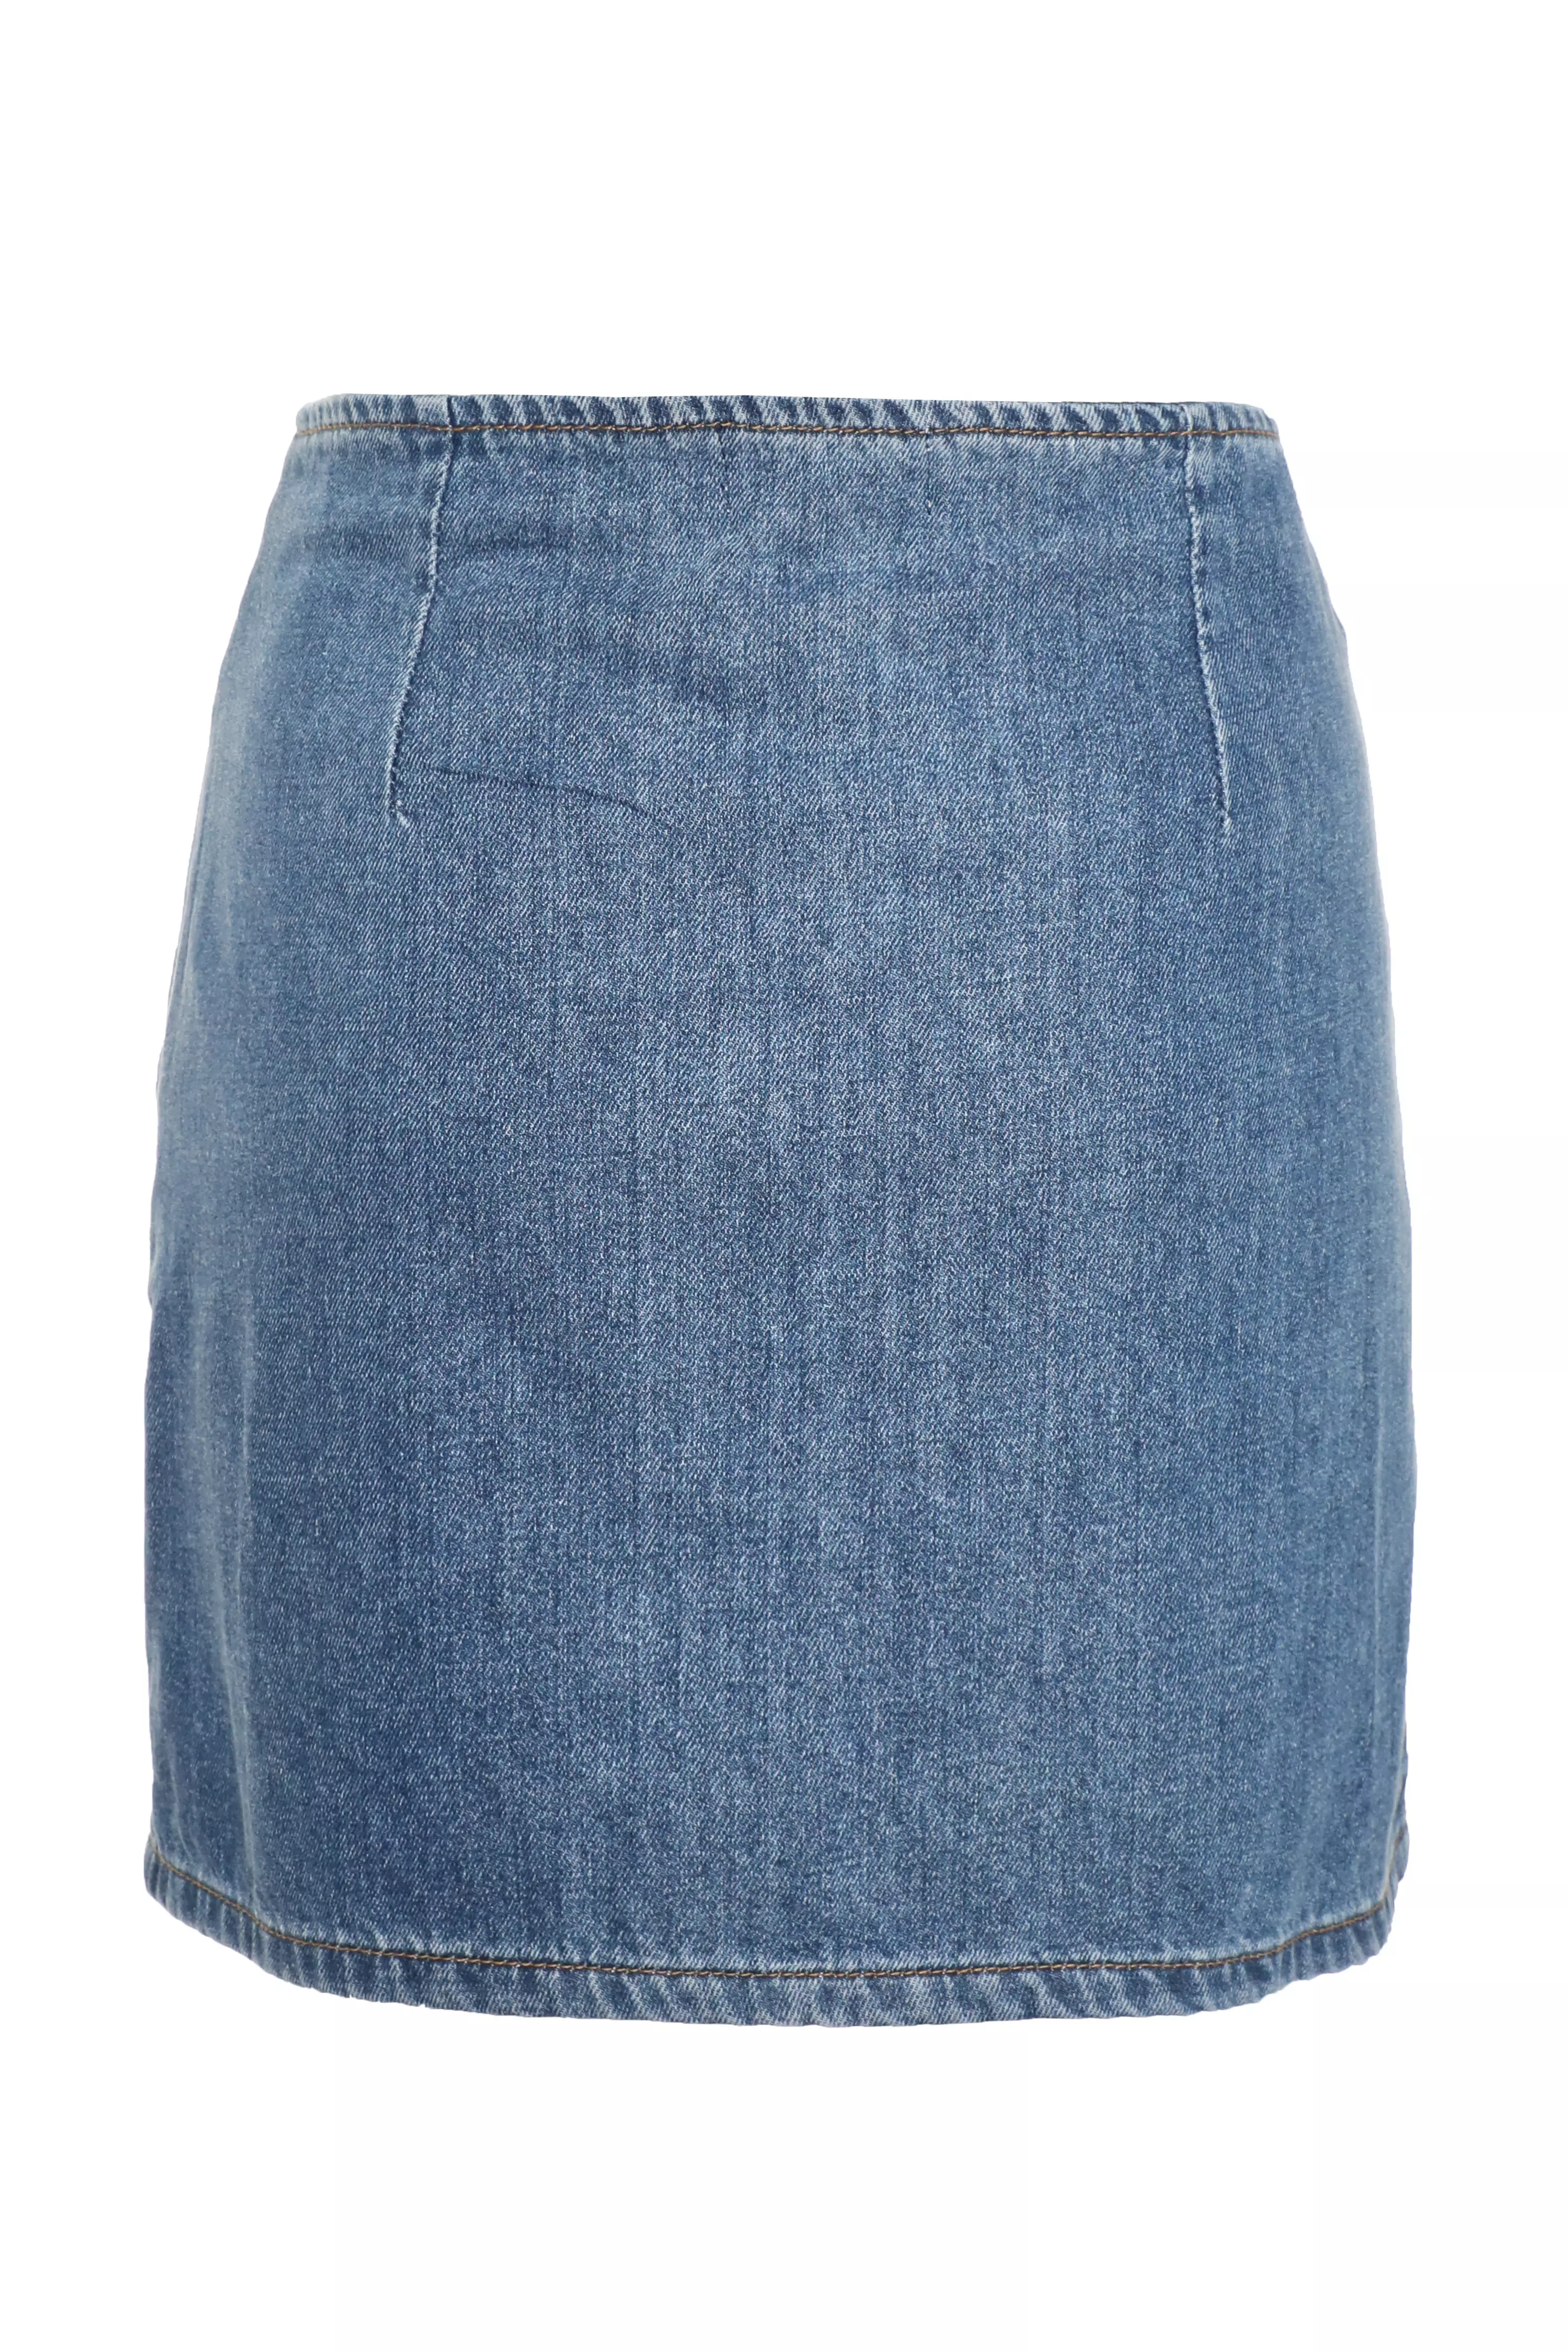 Blue Denim Embellished Mini Skirt